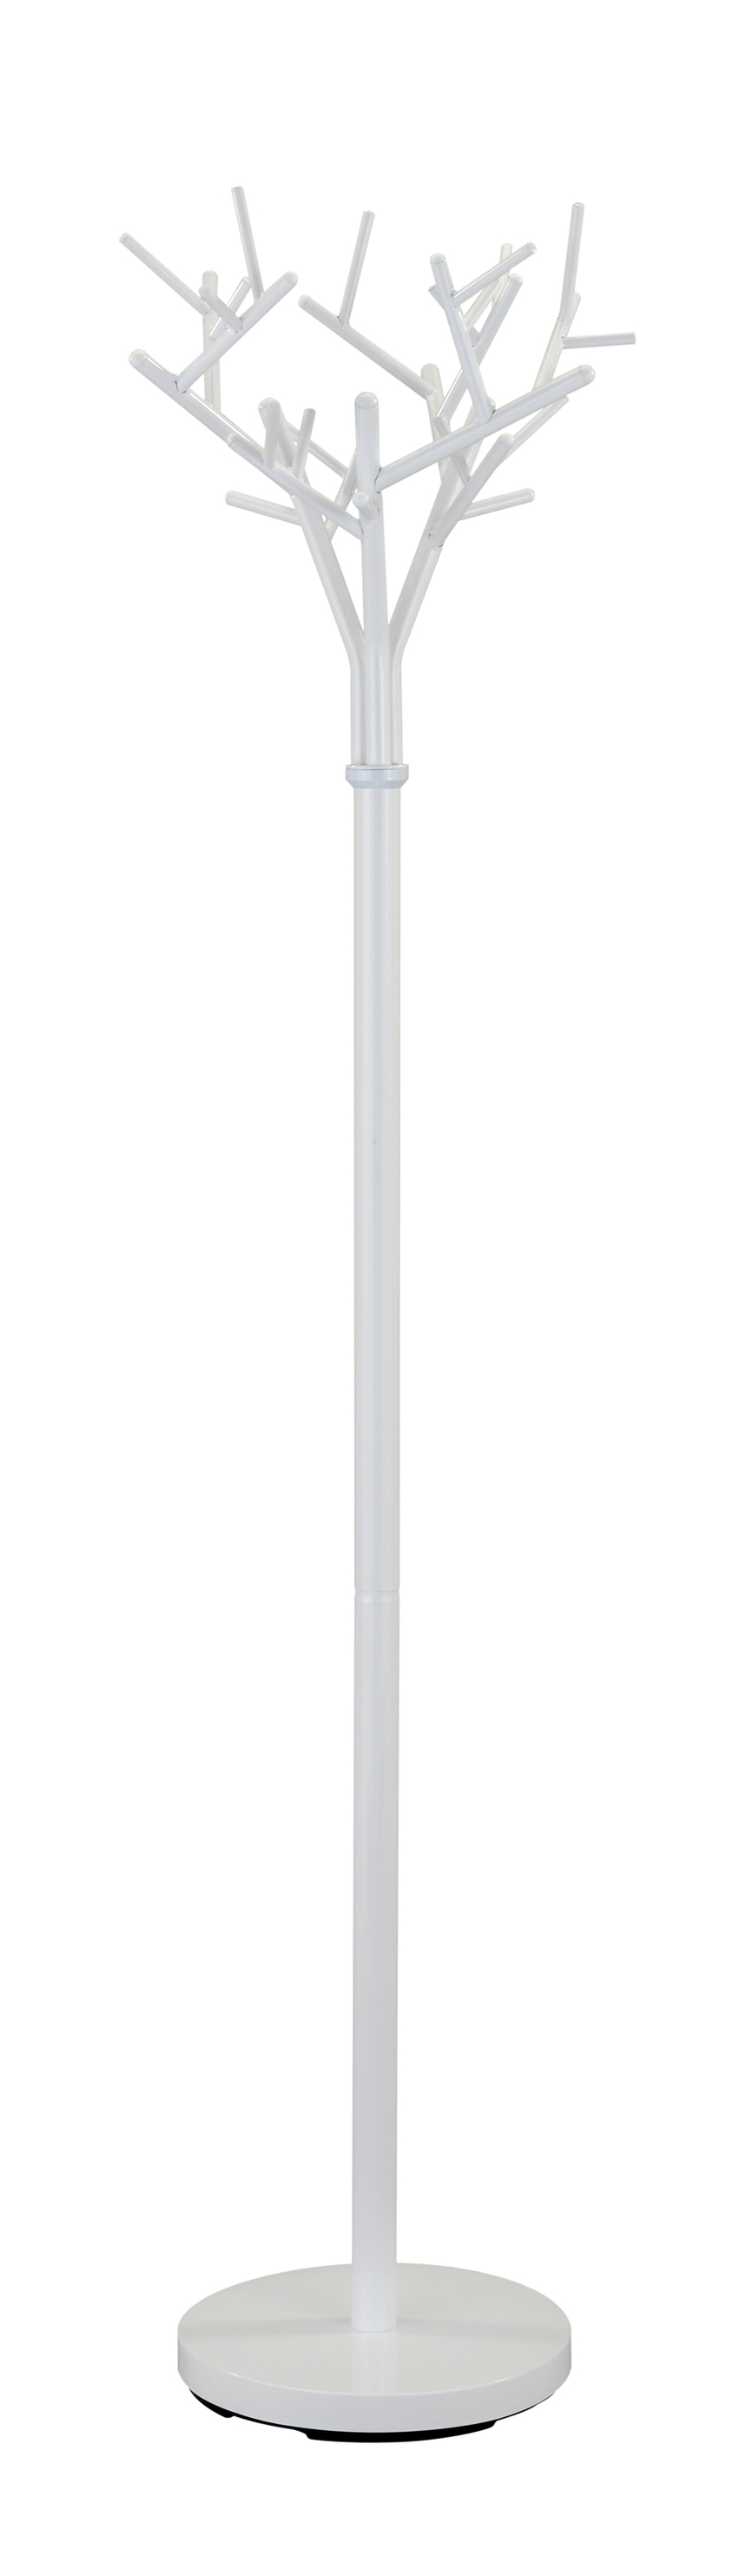 W56 hanger, color: white